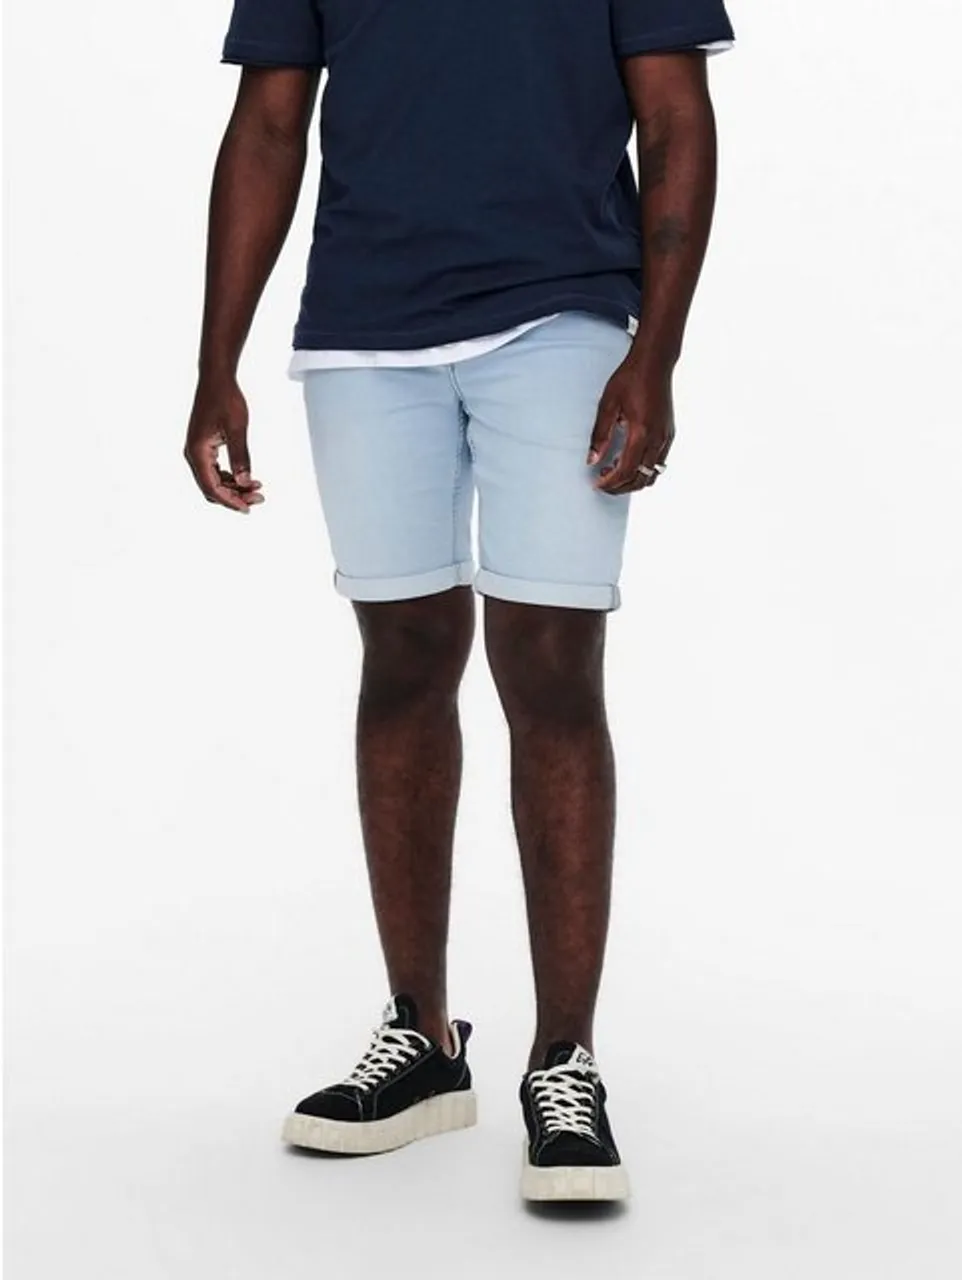 ONLY & SONS Jeansshorts Denim Capri Jeans Shorts 3/4 Bermuda Pants ONSPLY 5021 in Blau